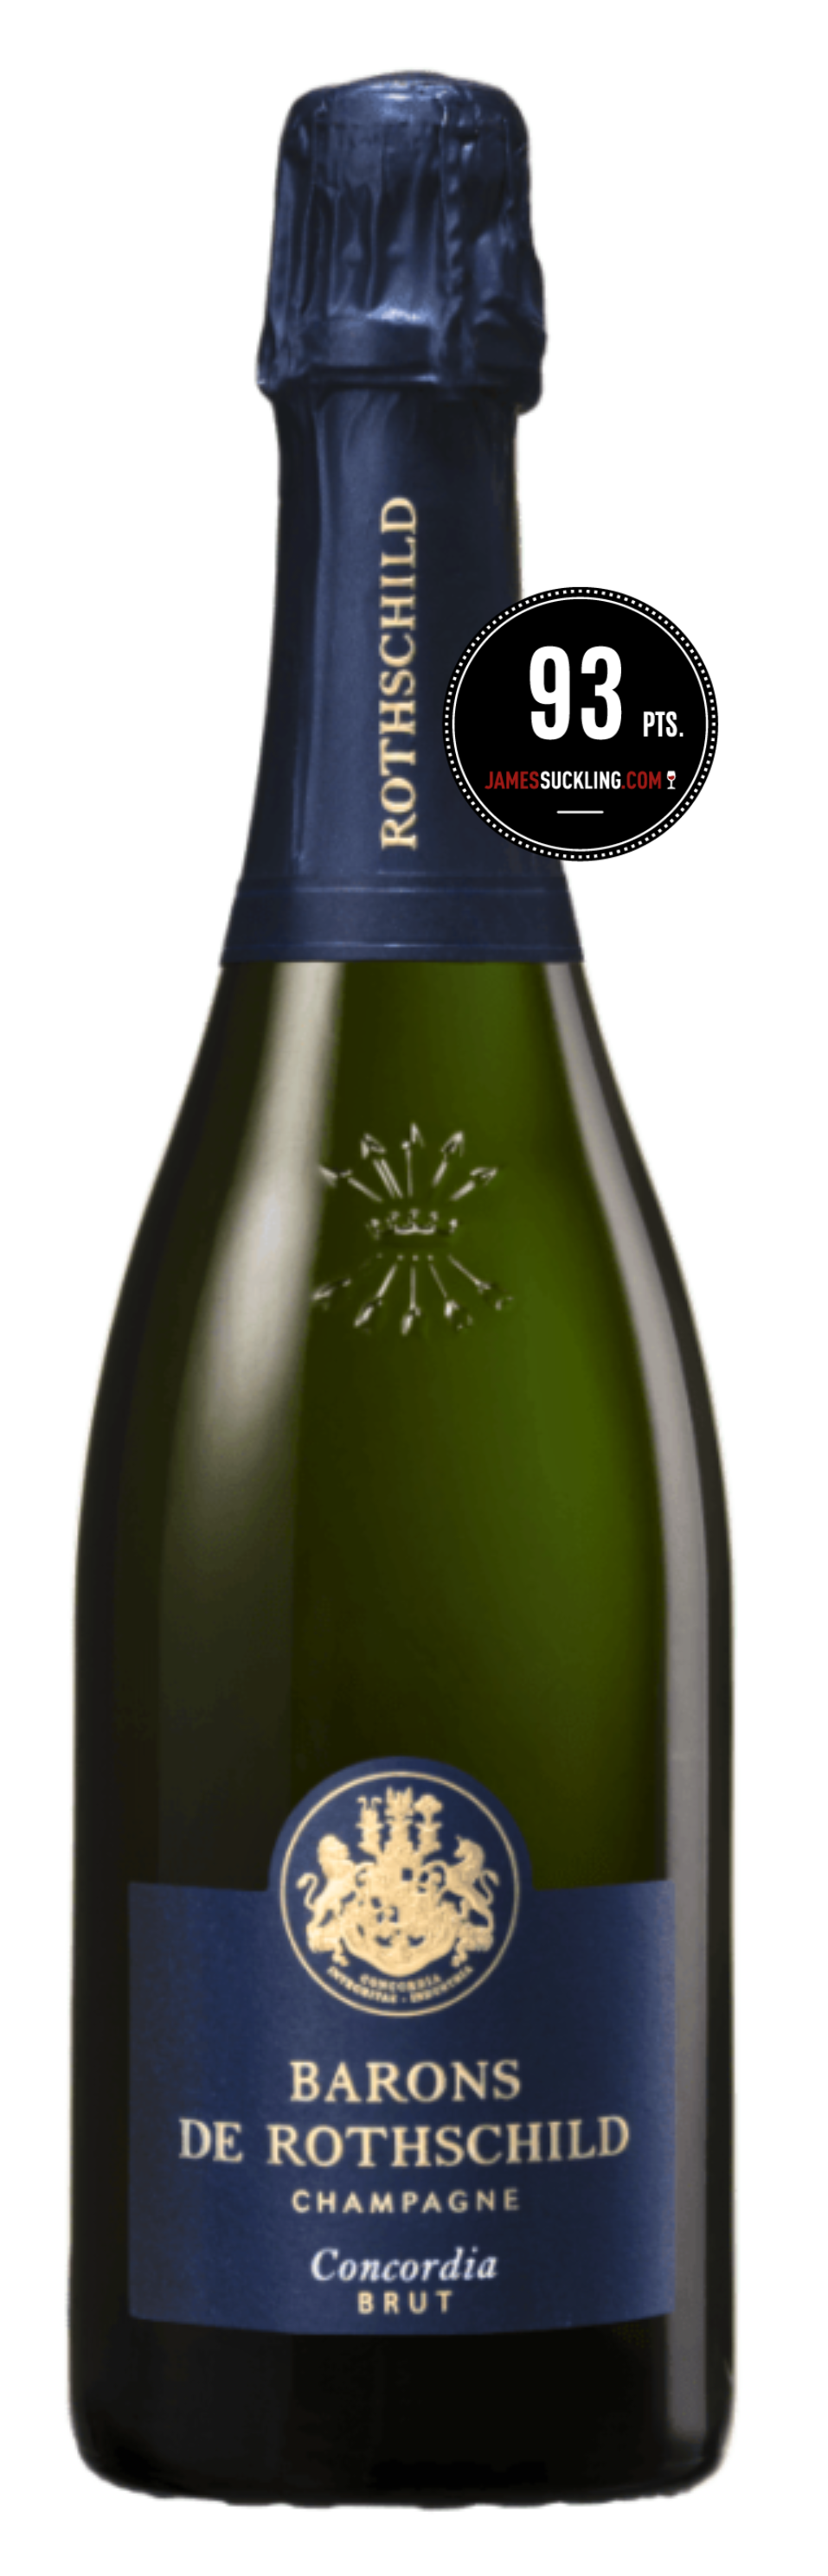 Champagne Barons de Rothschild Concordia Brut (JS: 93)